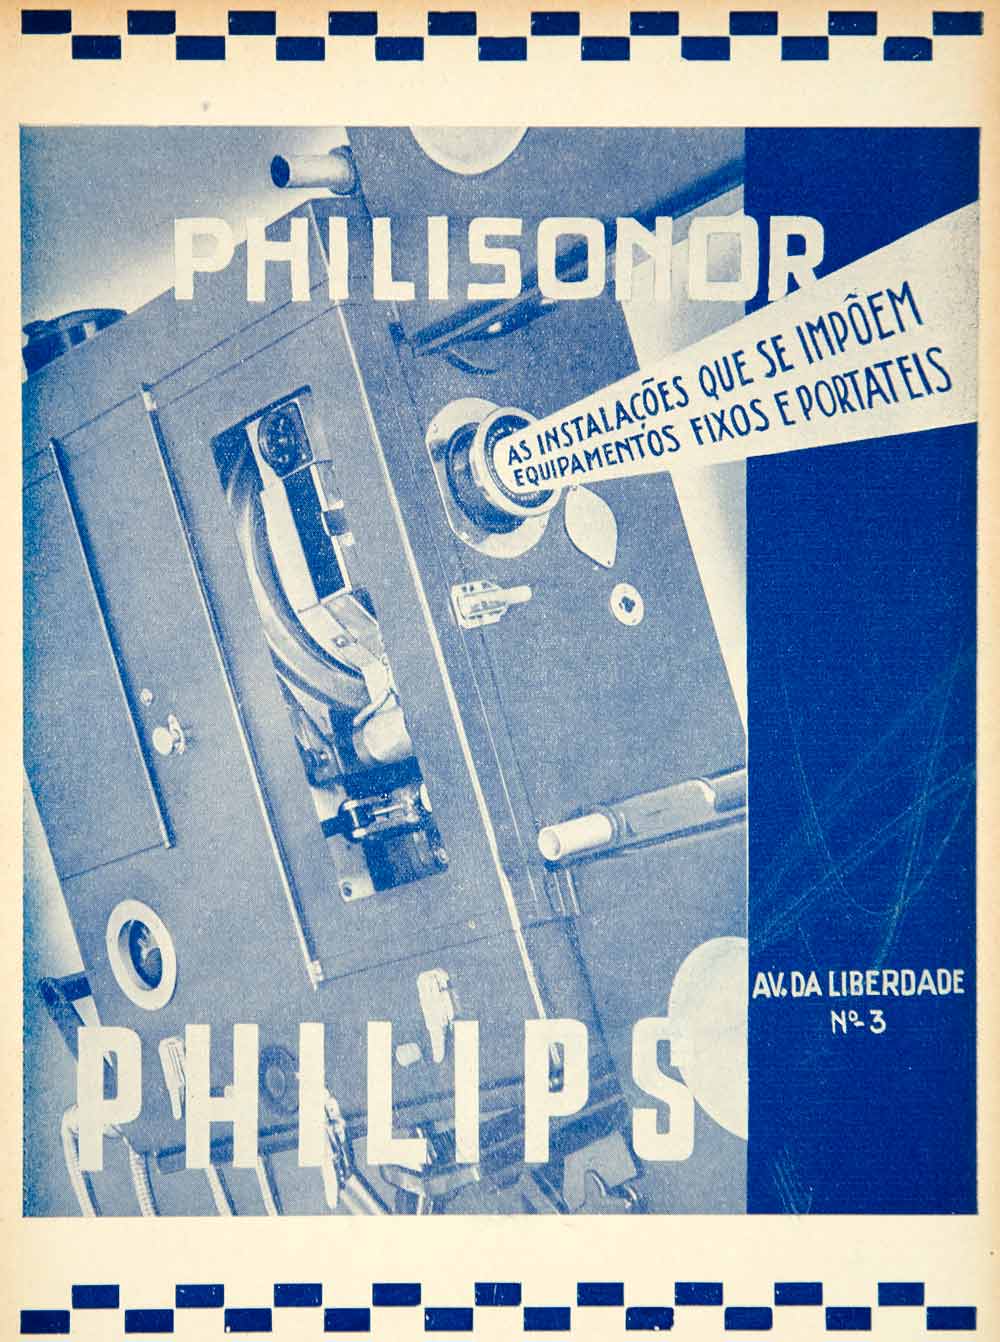 1935 Ad Vintage Philips Philisonor Movie Theatre Projector Portuguese YCF1